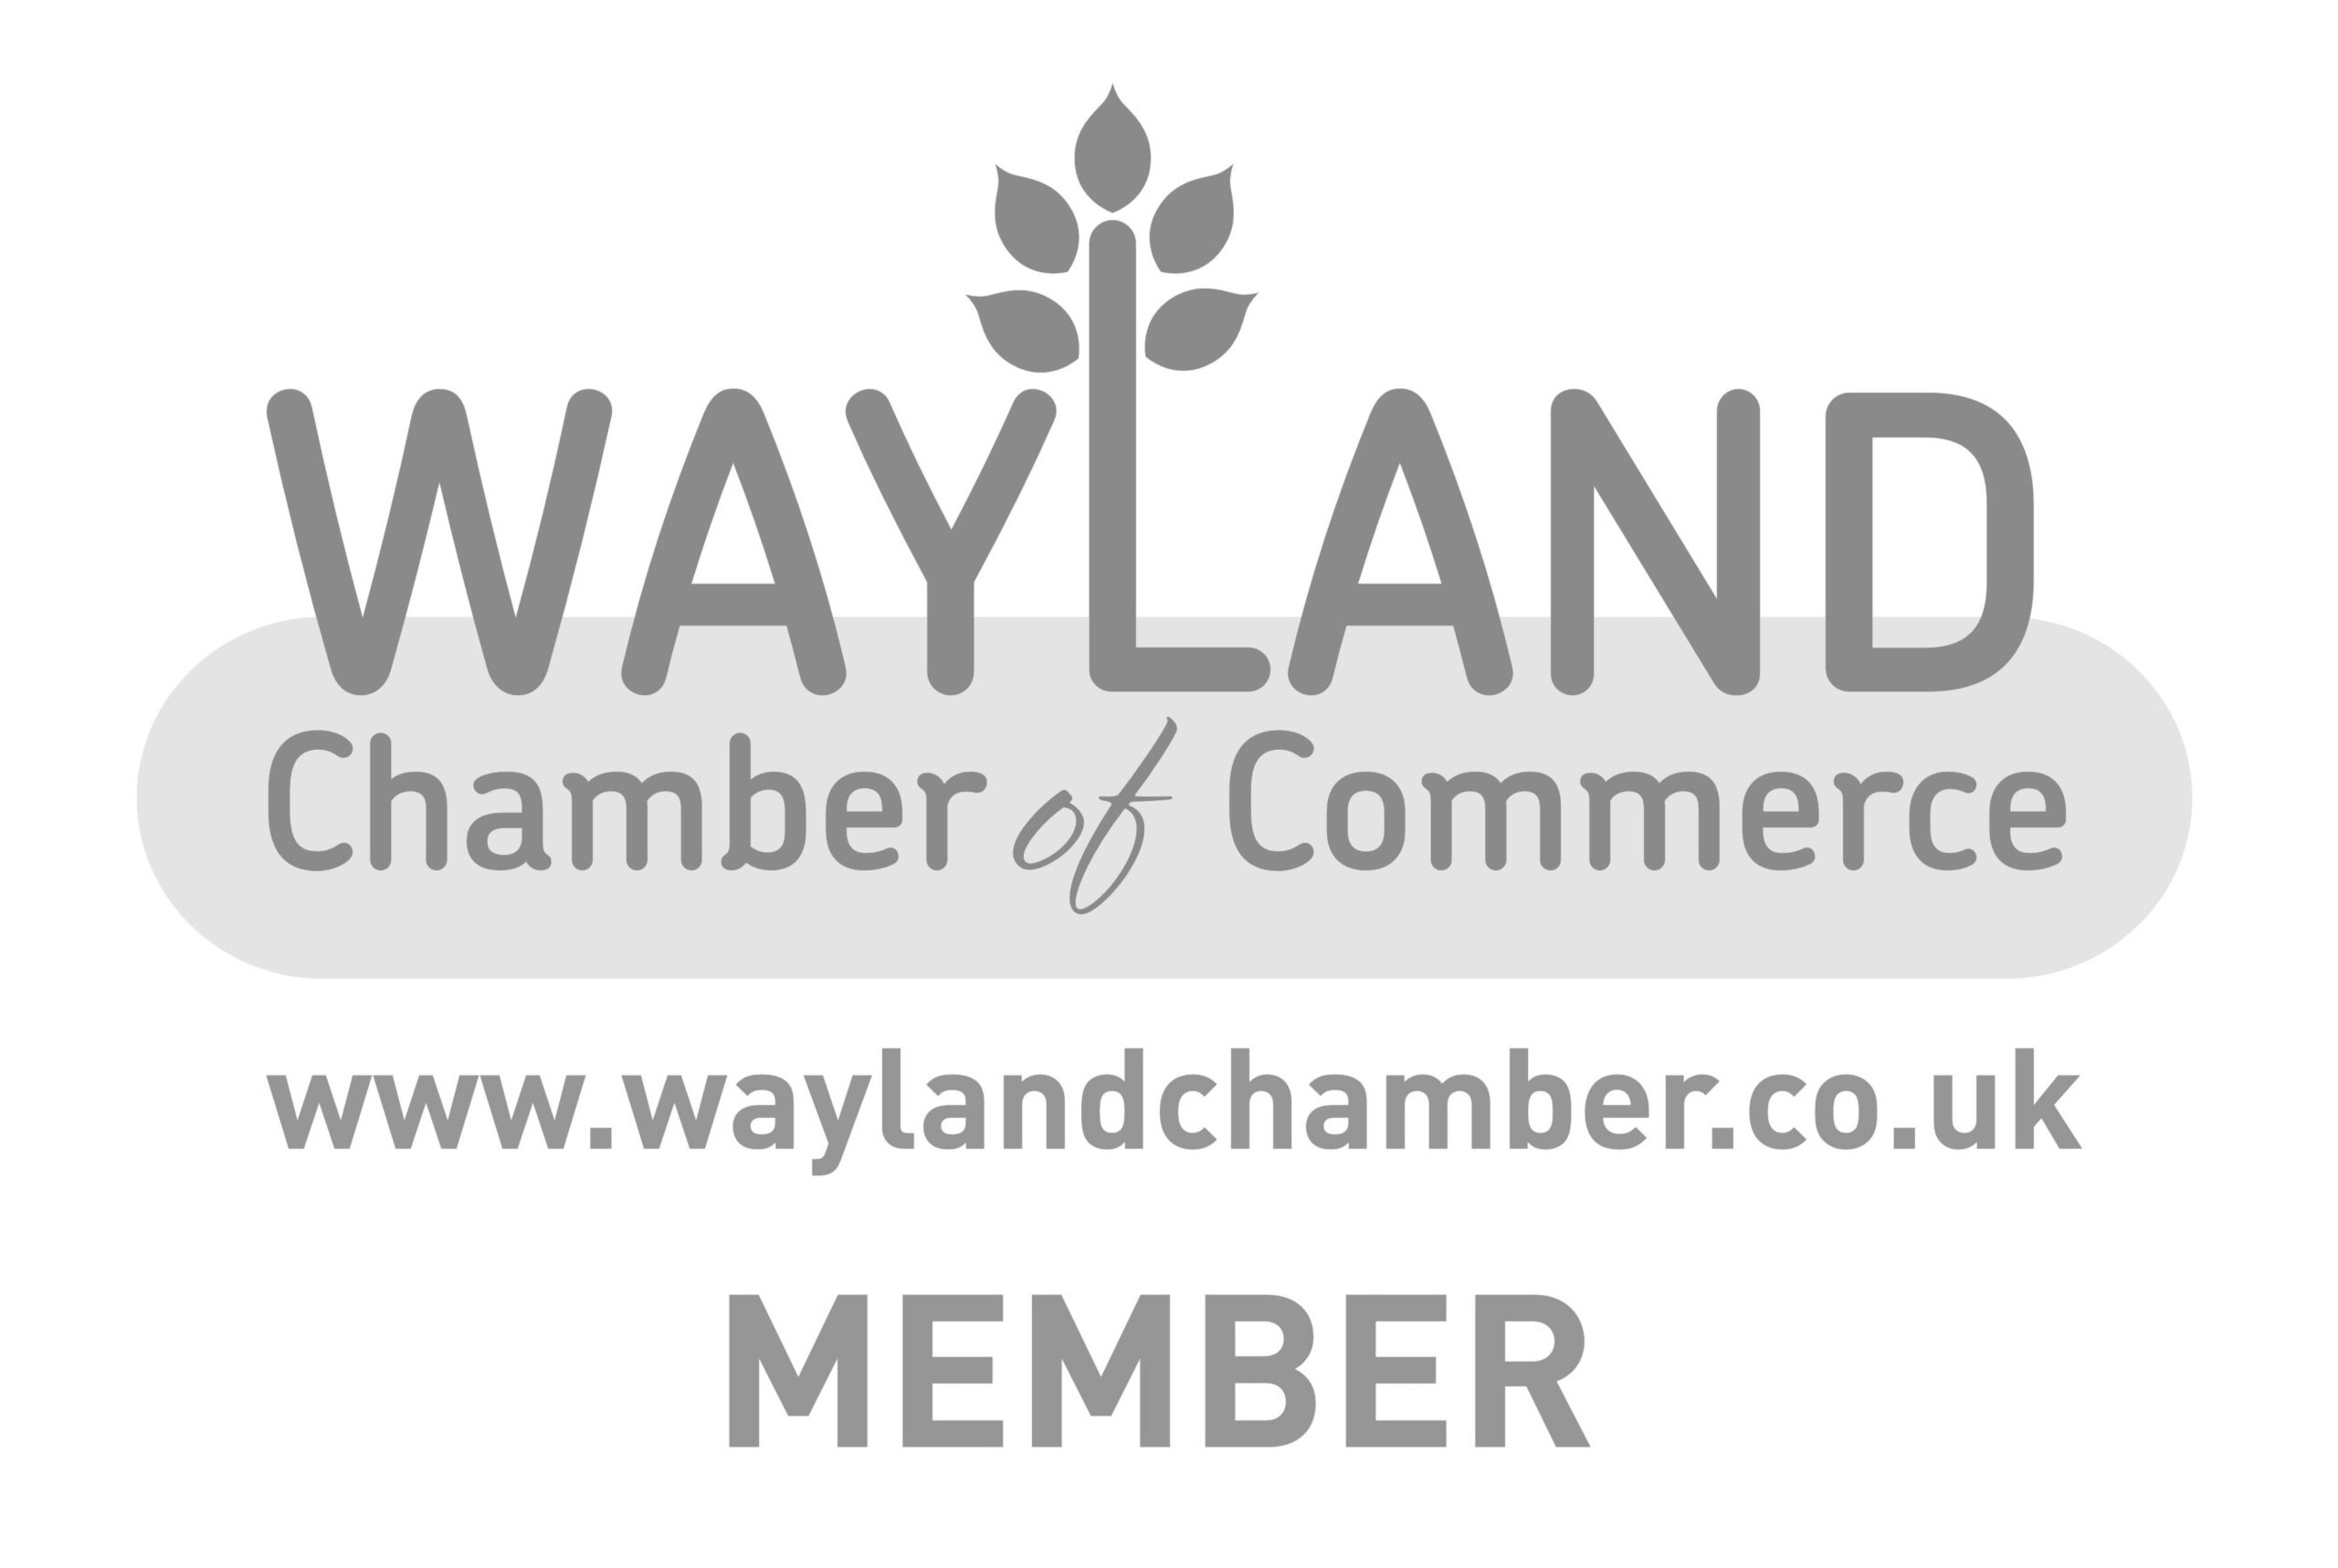 wayland chamber of commerce logo